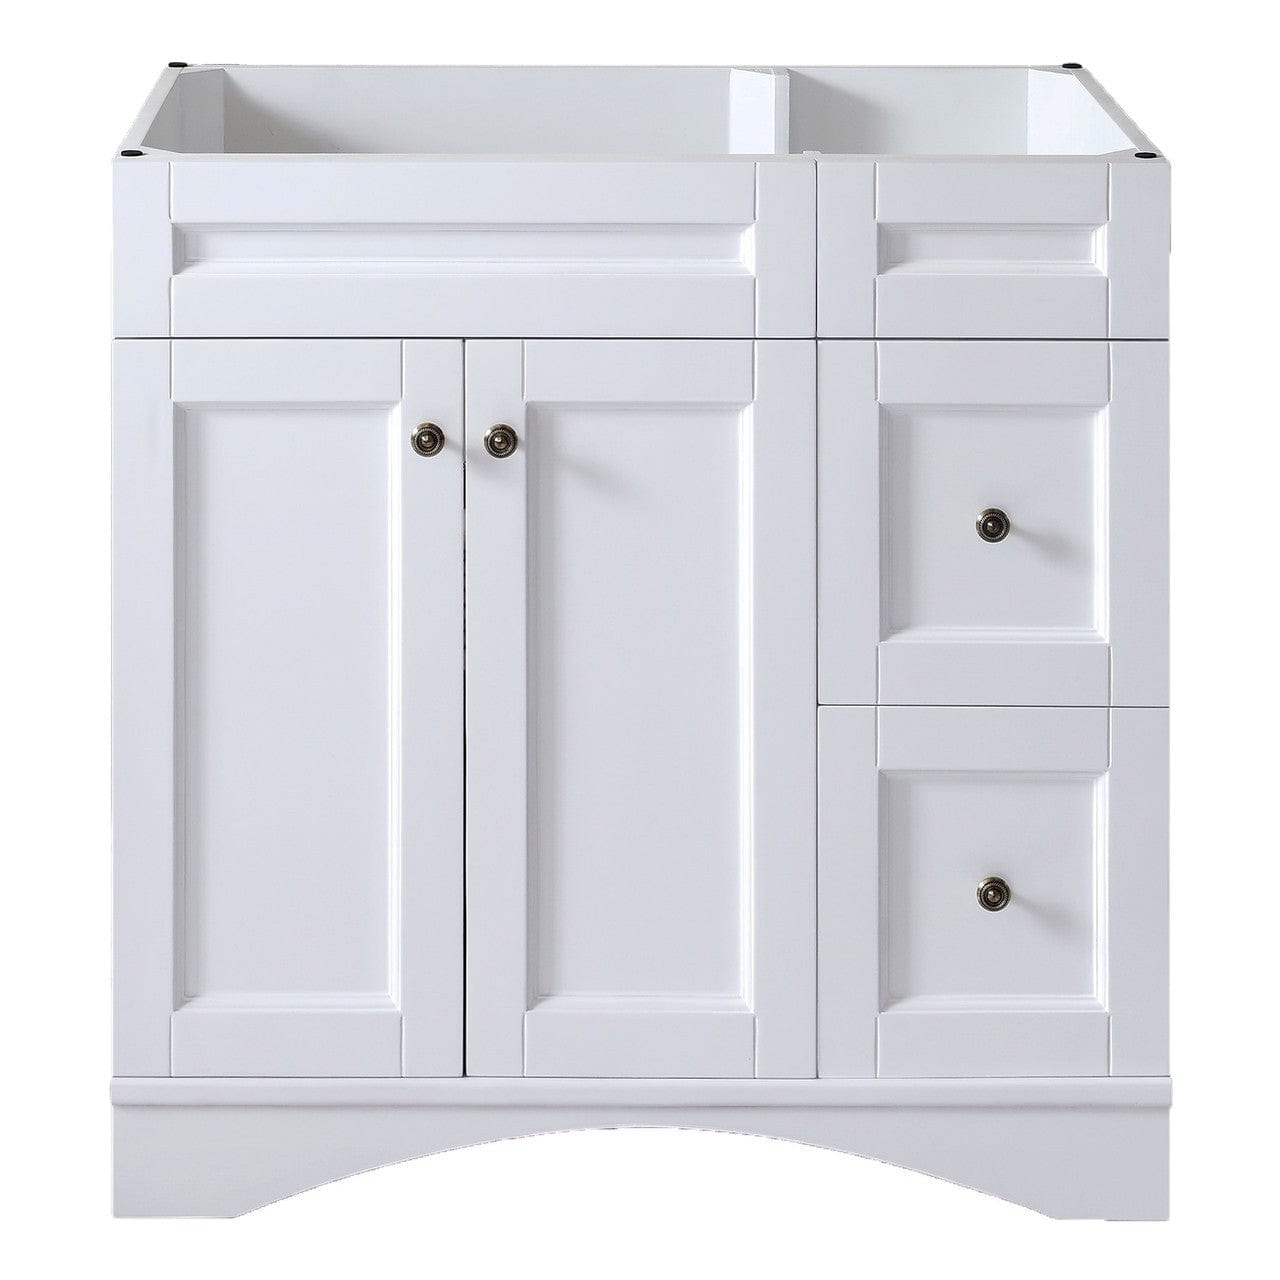 Virtu USA Elise 47" Single Bathroom Vanity Cabinet in White